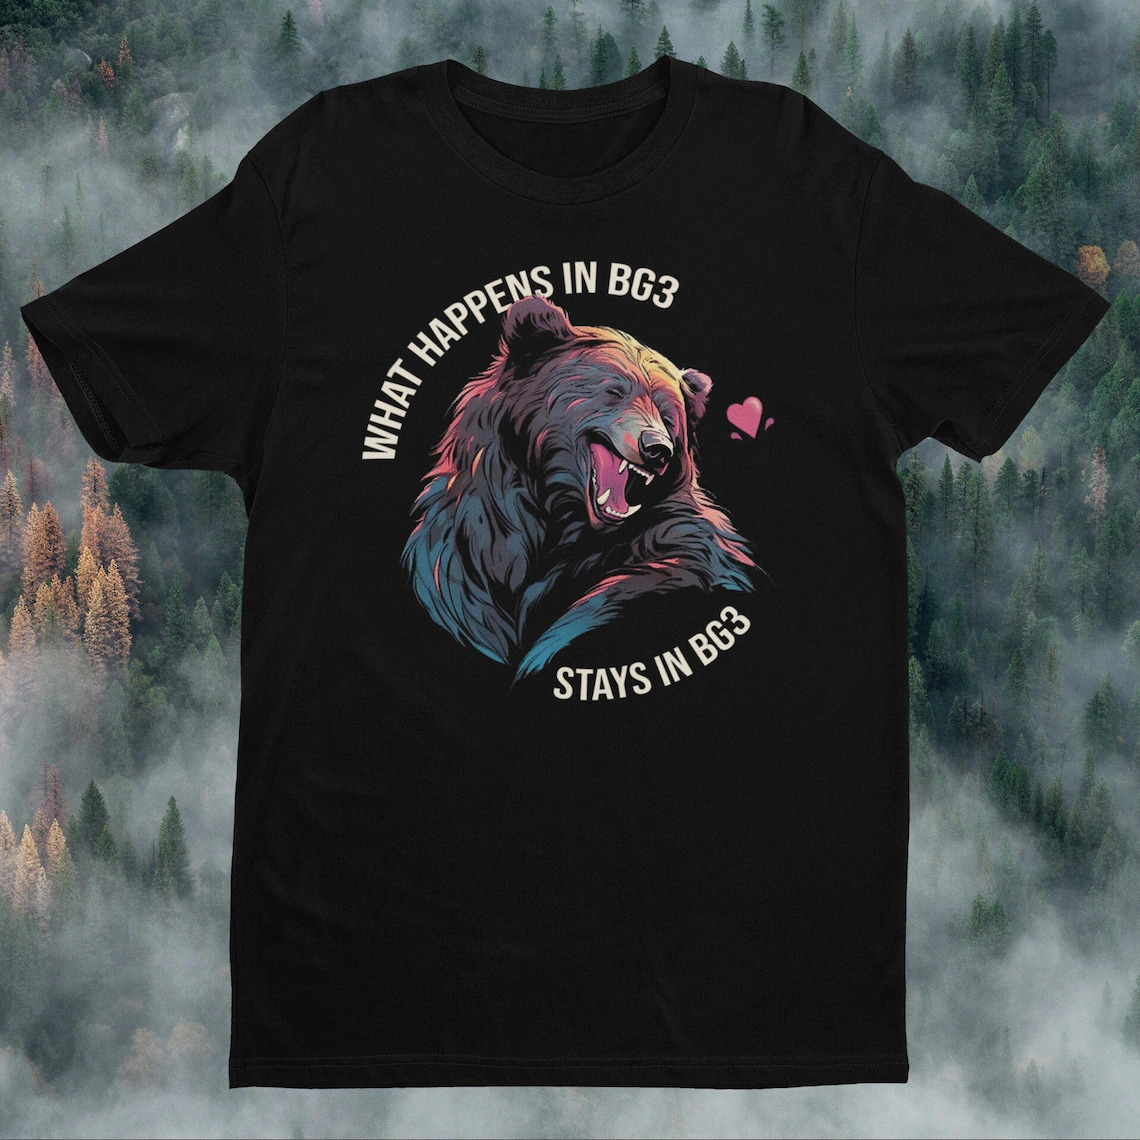 A promotional image of a Baldur's Gate 3 fan-made t-shirt by SpiritedDragonUS on Etsy. 